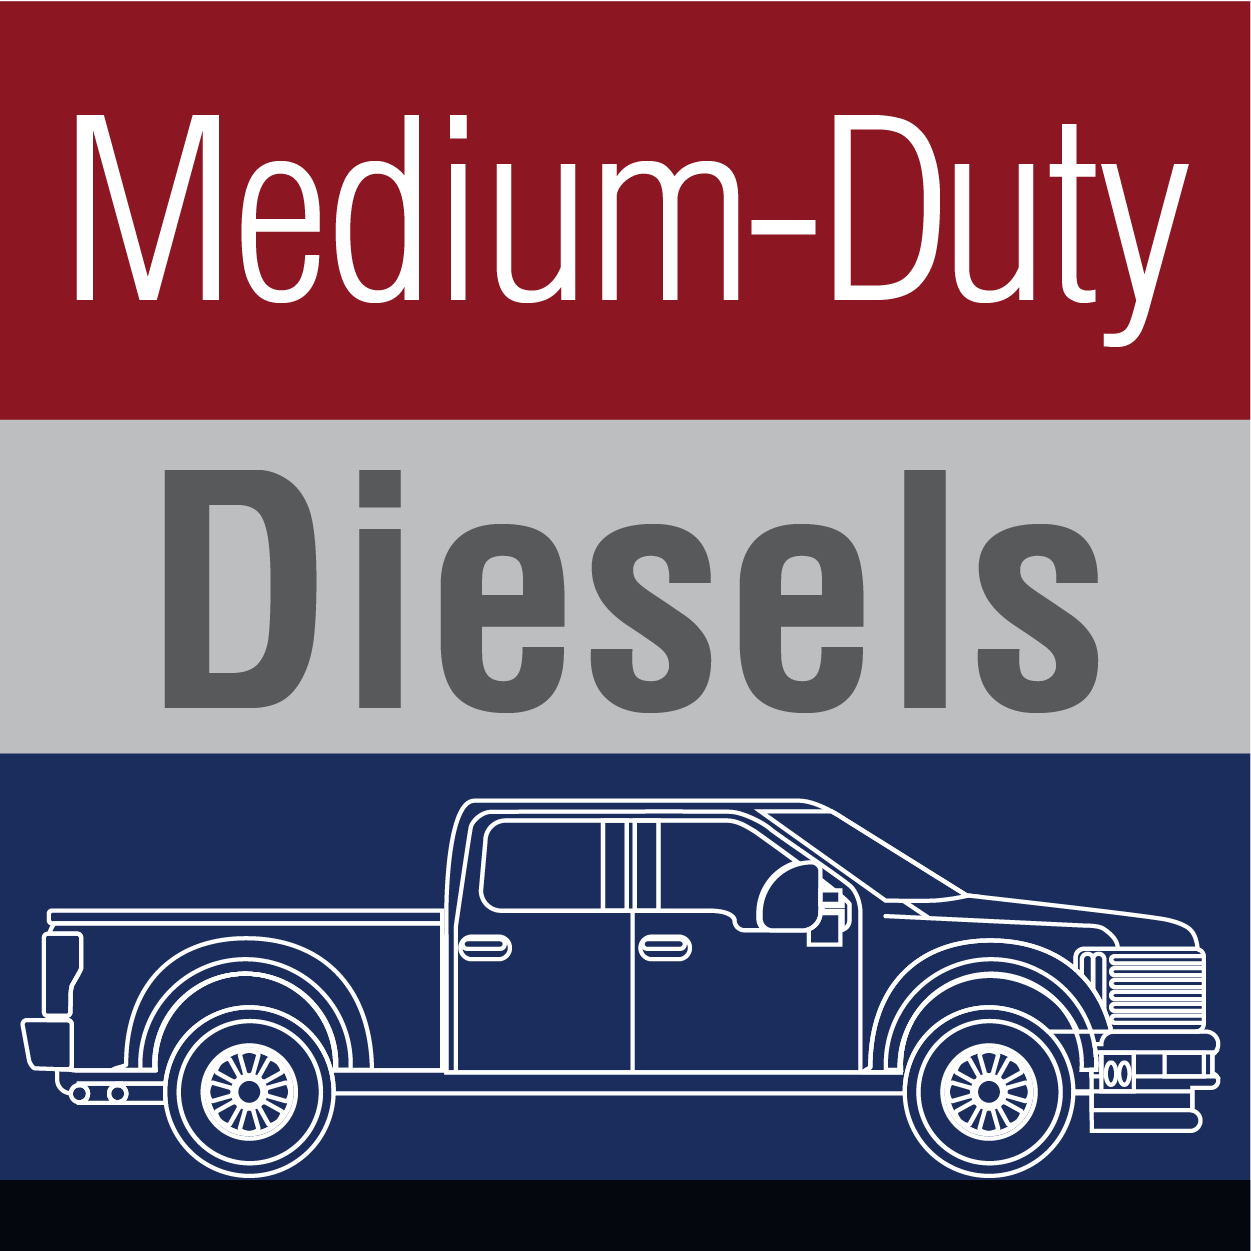 For Automotive Service Technicians: Important and simple diesel maintenance